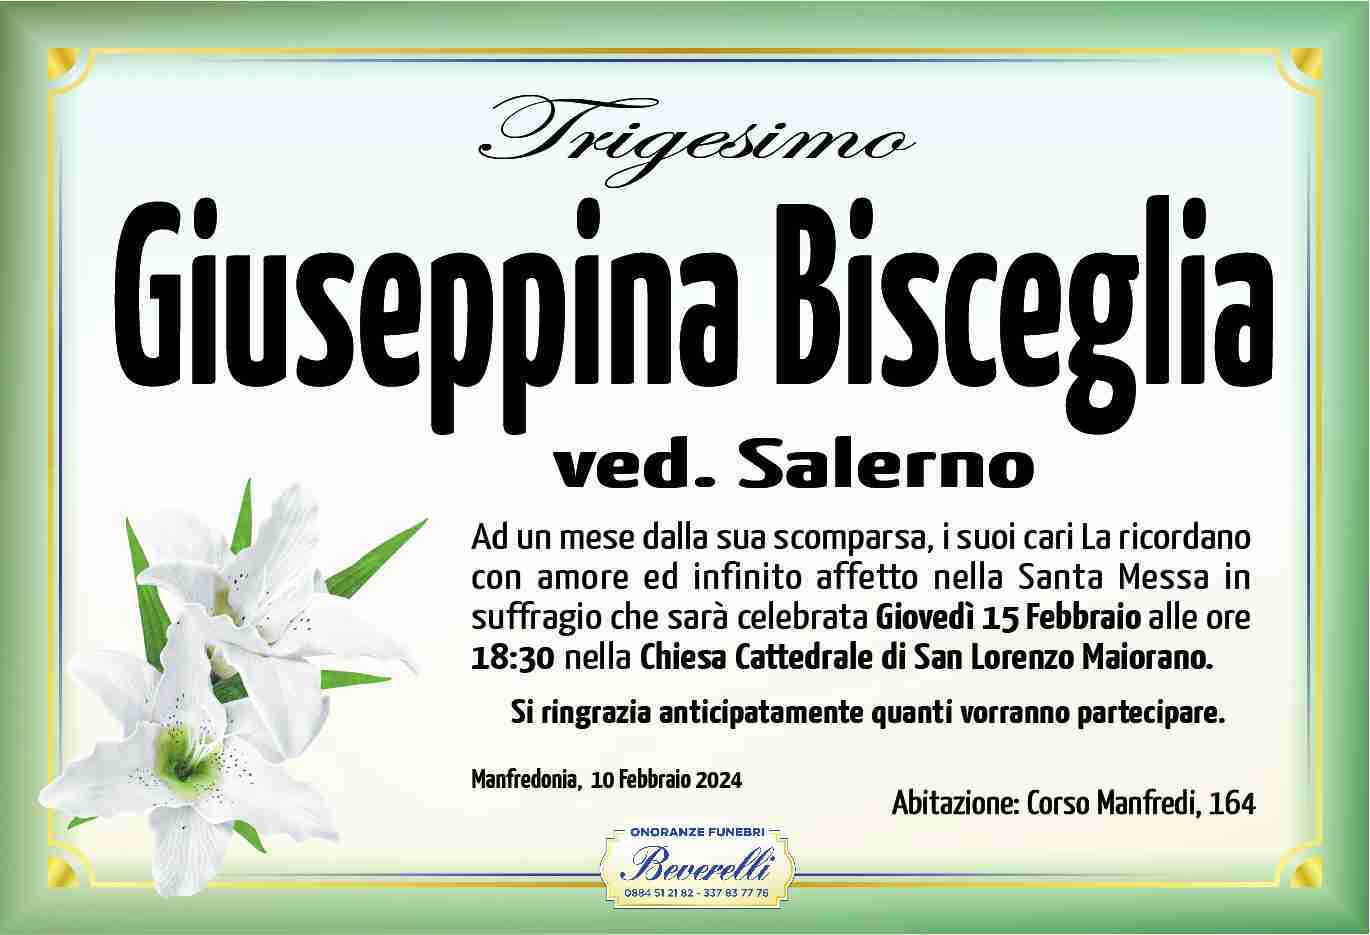 Giuseppina Bisceglia